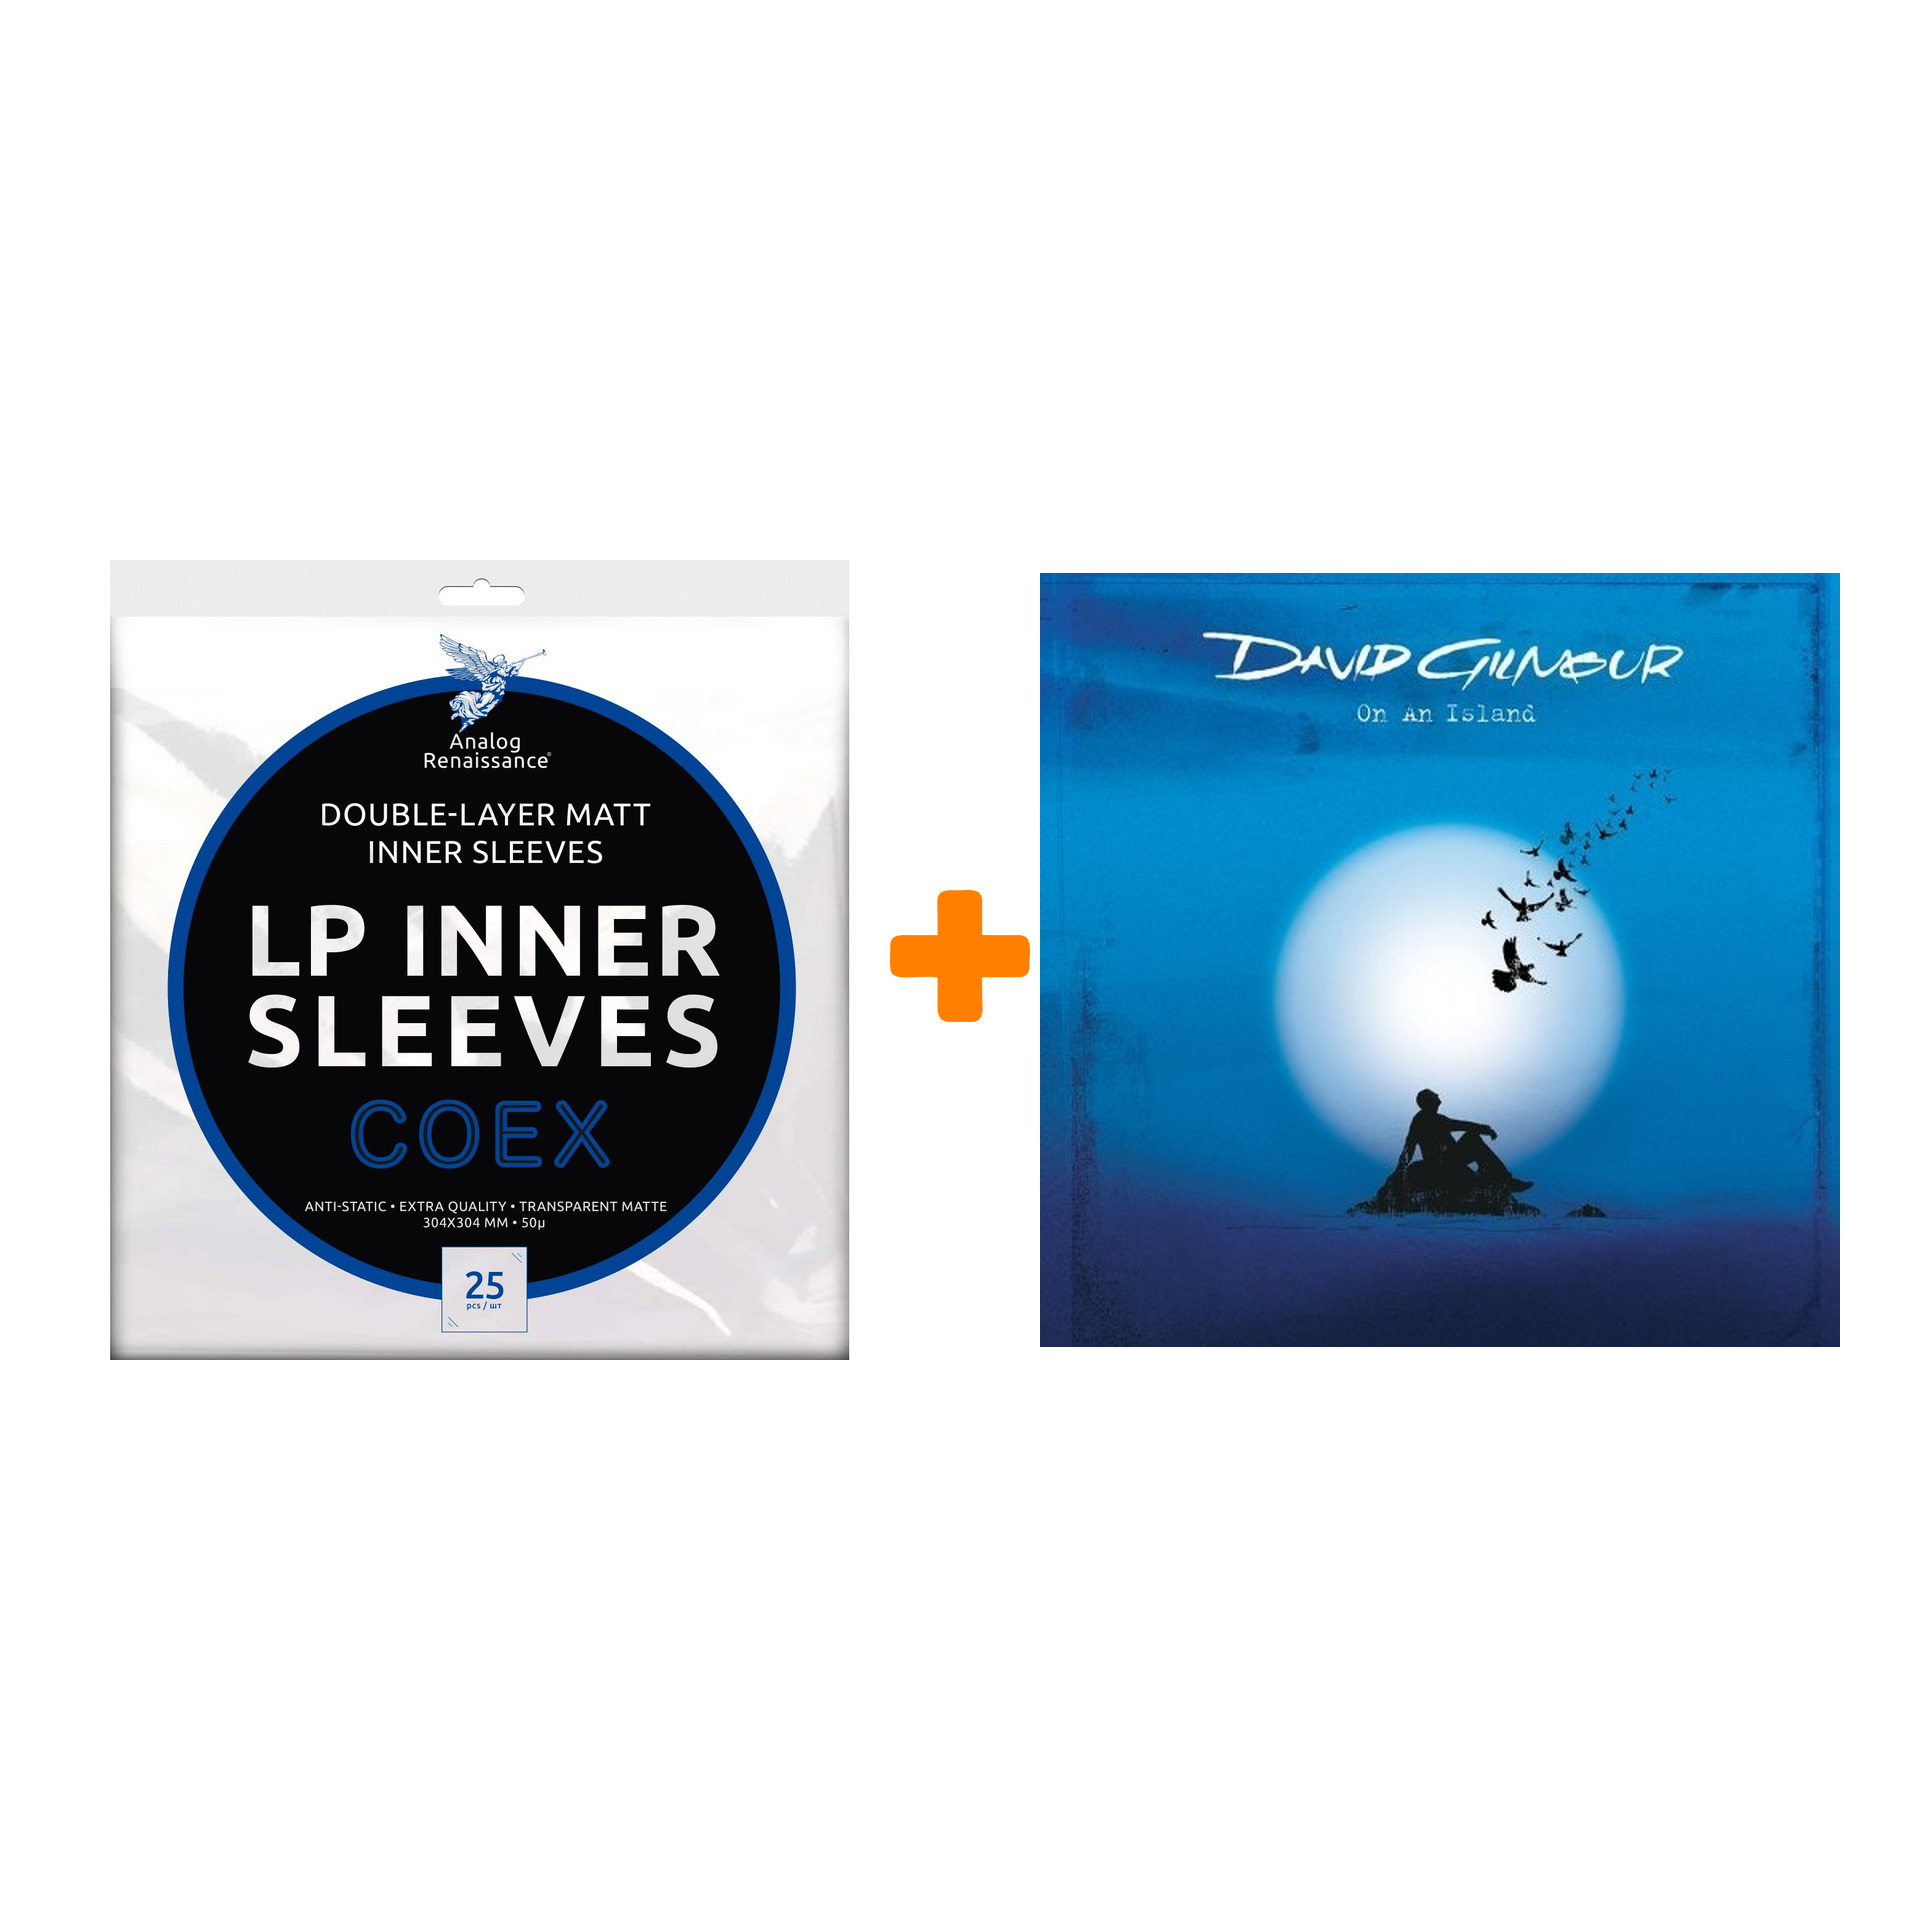 GILMOUR DAVID On An Island Limited Edition LP + Конверты внутренние COEX для грампластинок 12 25шт Набор